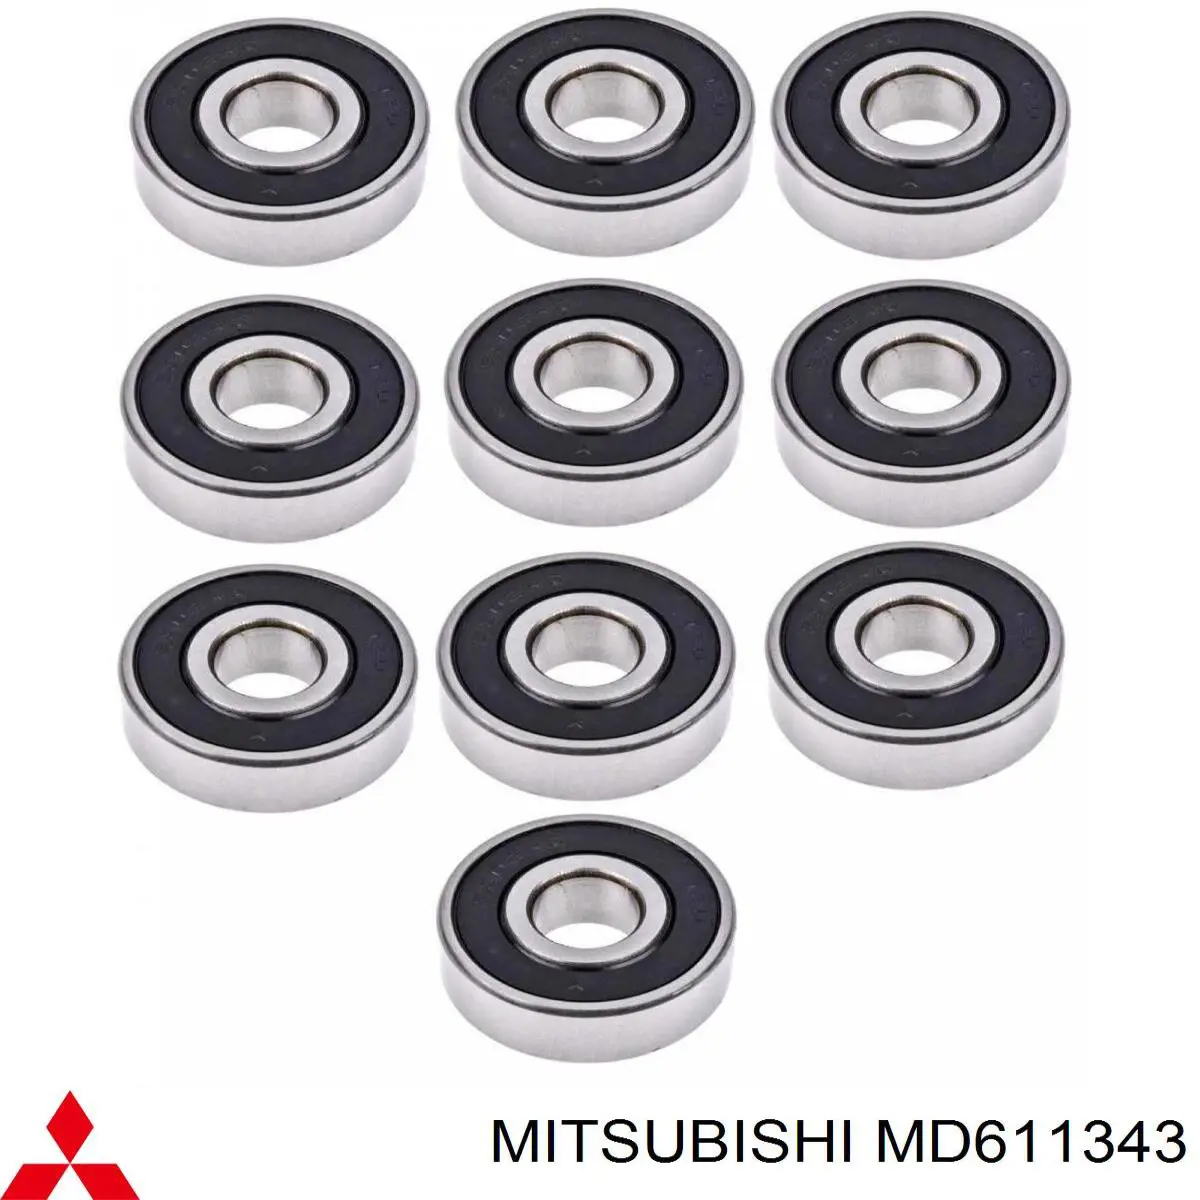 MD611343 Mitsubishi підшипник генератора